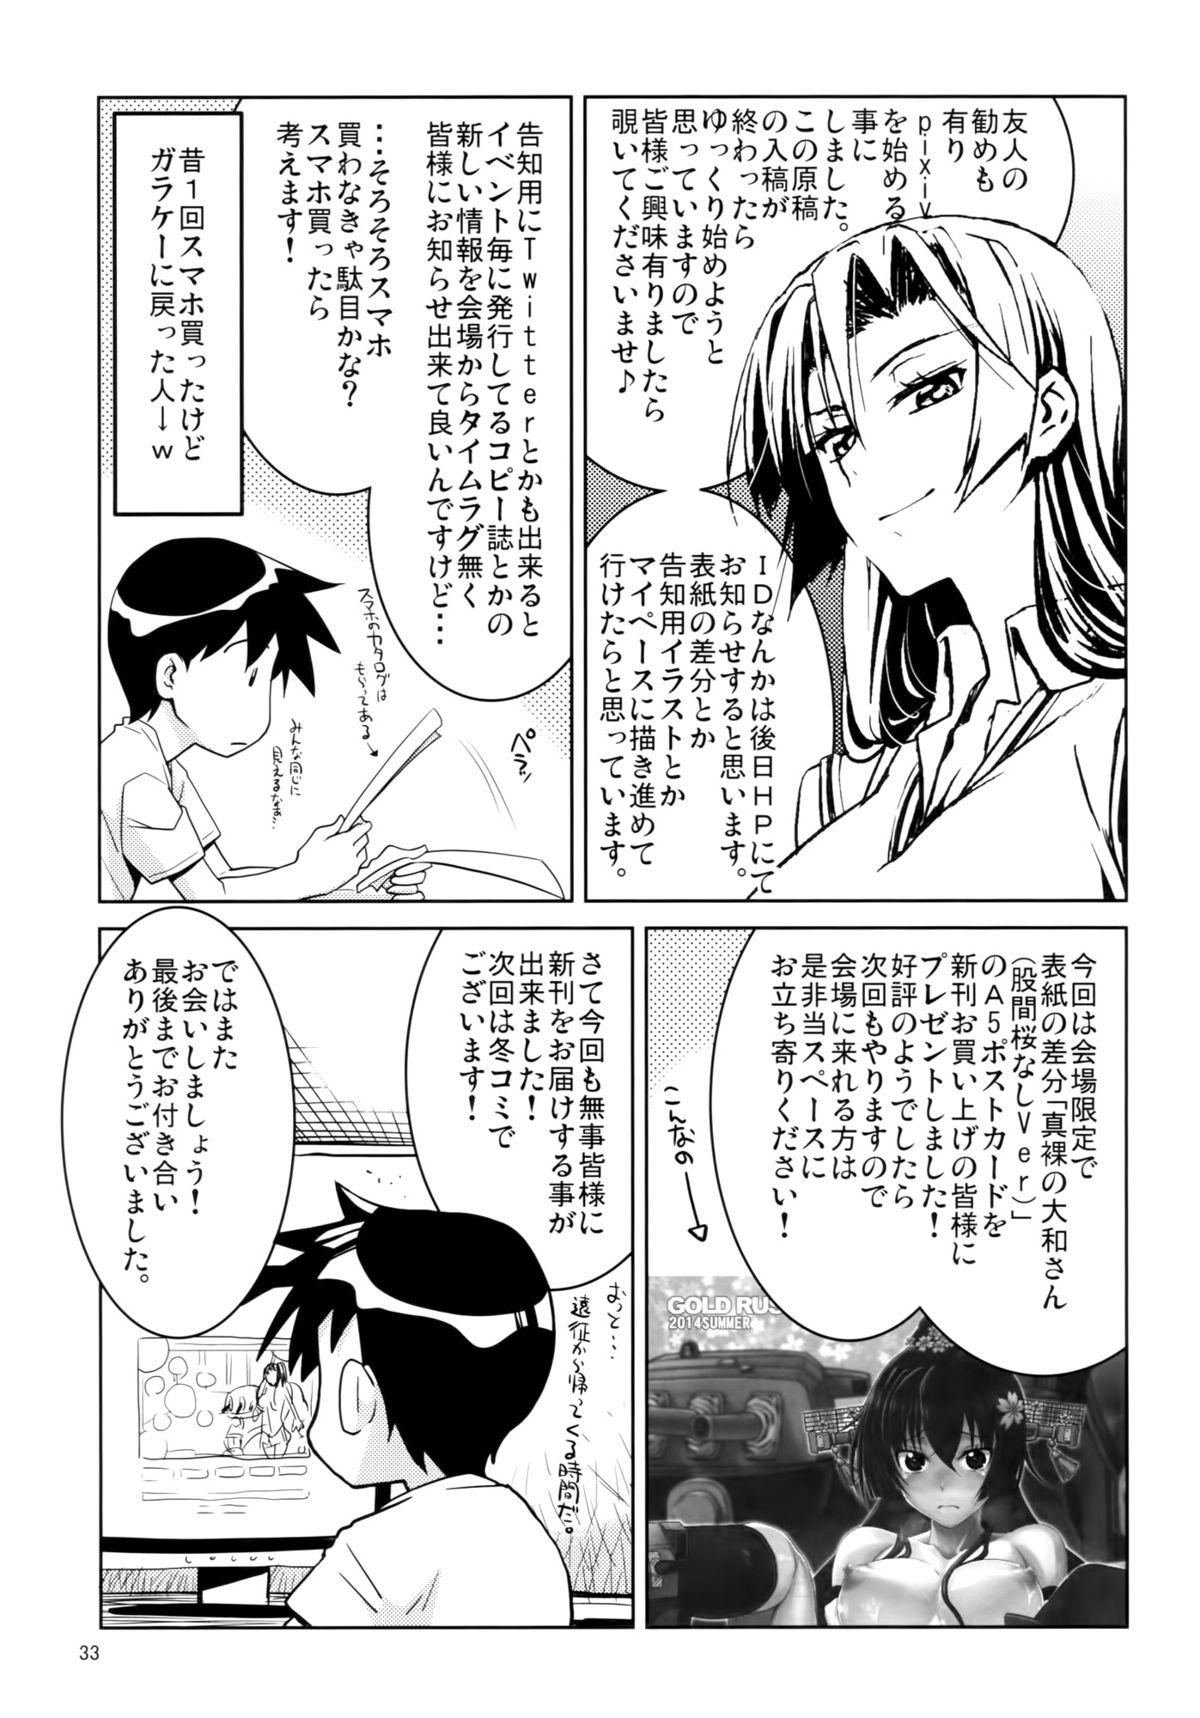 Yamato Page 30 Of 32 kantai collection hentai haven, Yamato Page 30 Of 32 k...